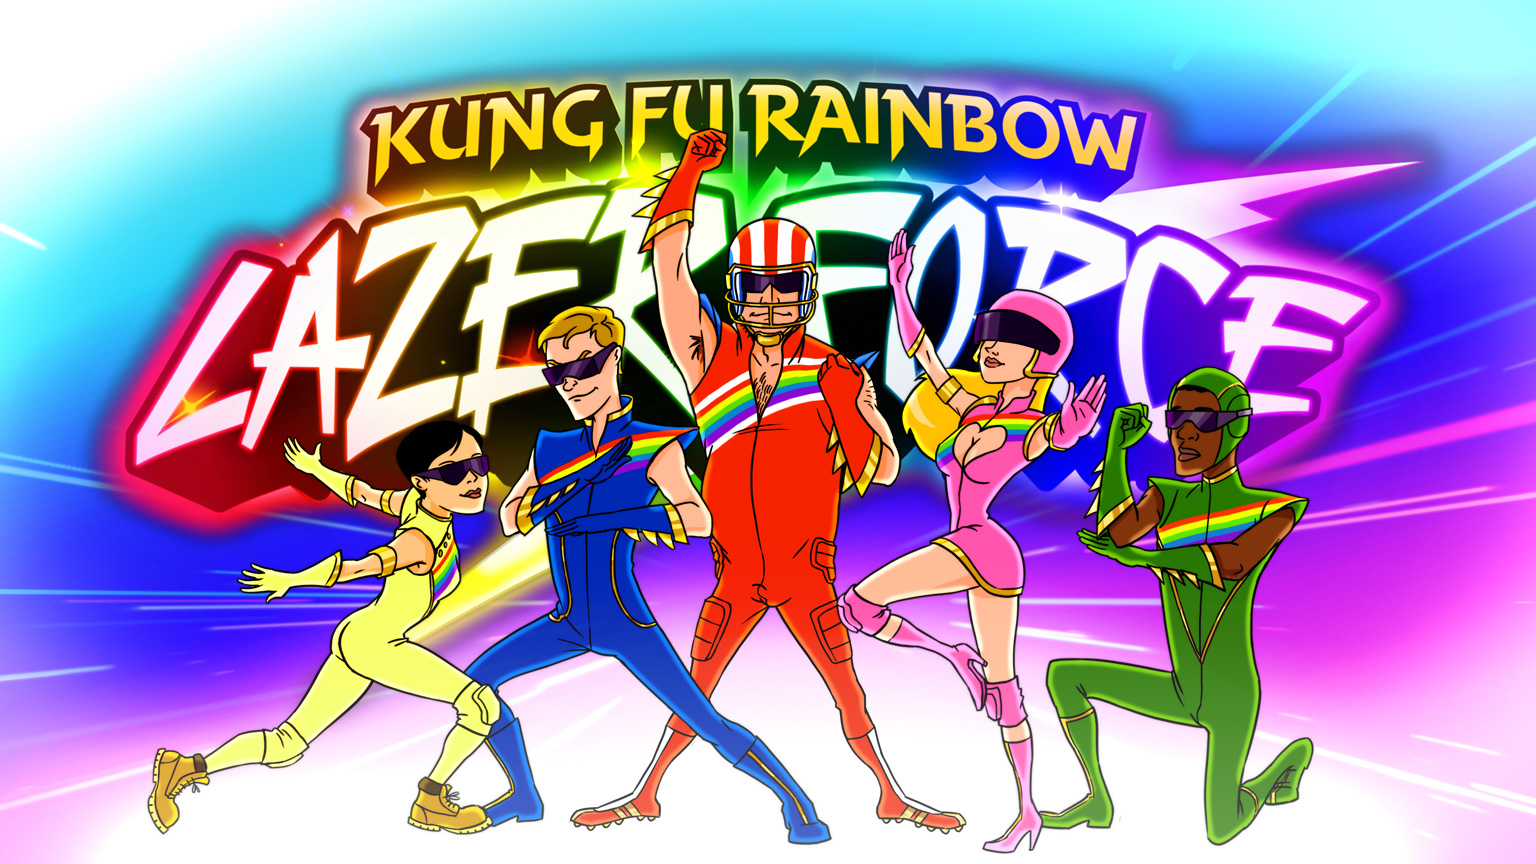 Gta 5 kung fu rainbow lazer force